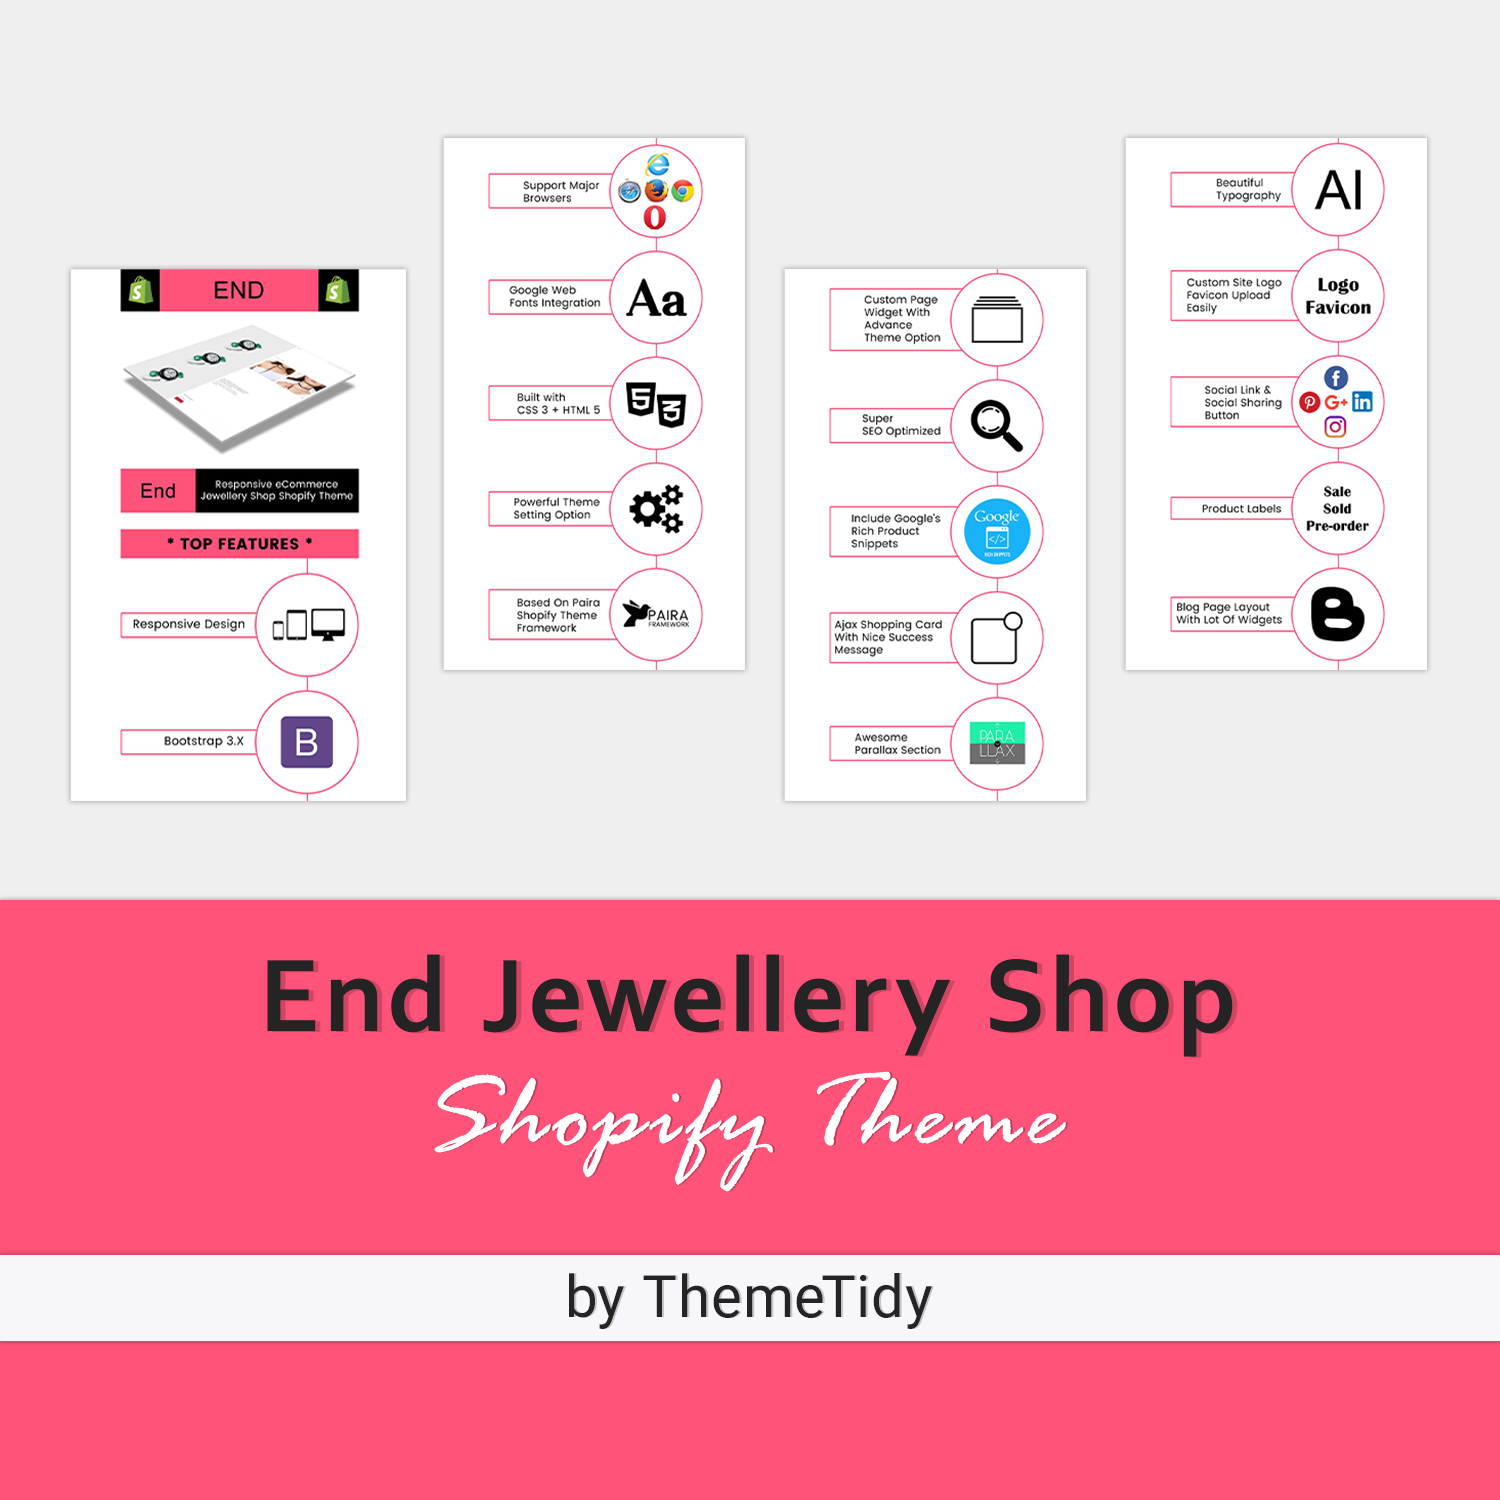 Preview end jewellery shop shopify theme.